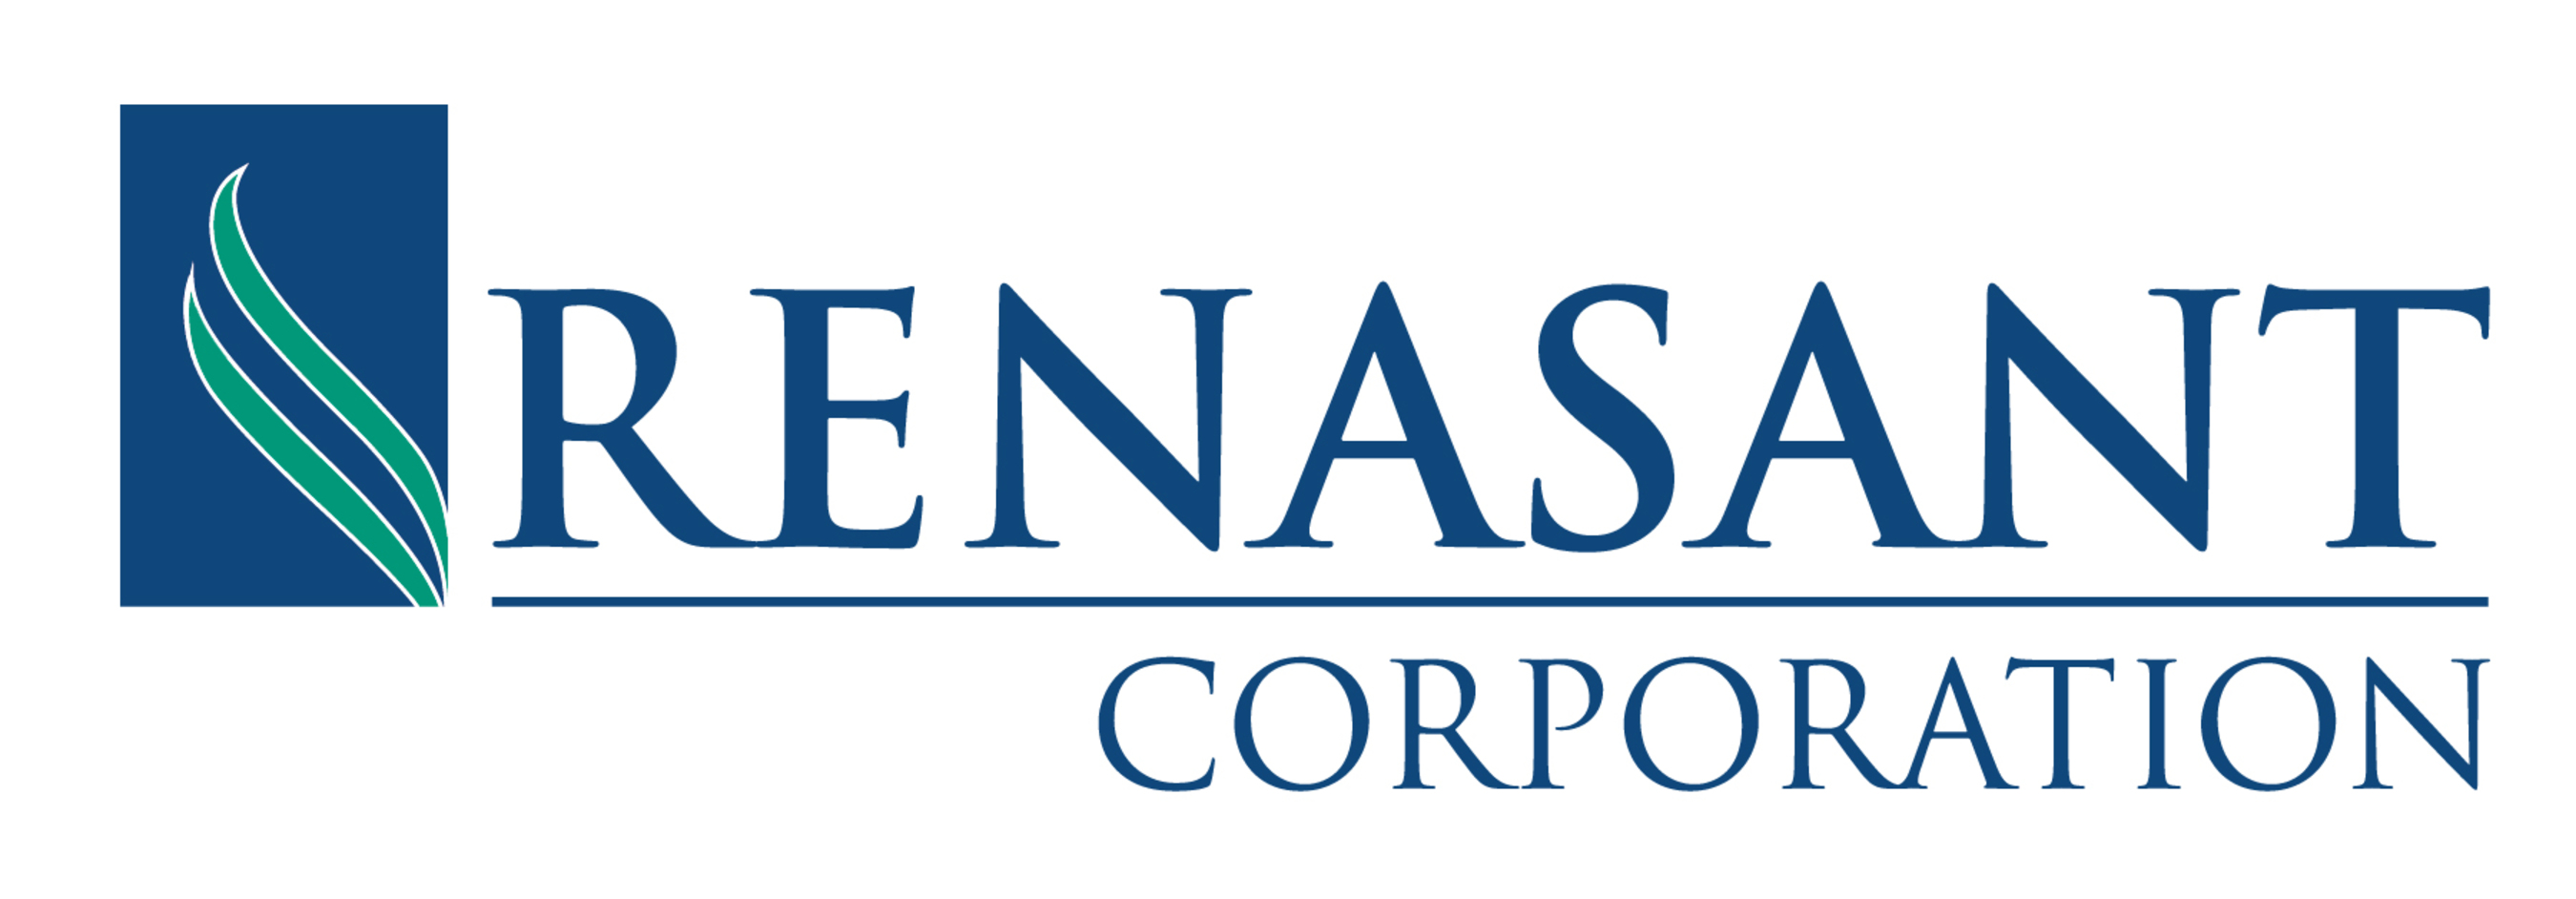 Renasant Corporation logo. (PRNewsFoto/Renasant Corporation) (PRNewsFoto/) (PRNewsFoto/Renasant Corporation)